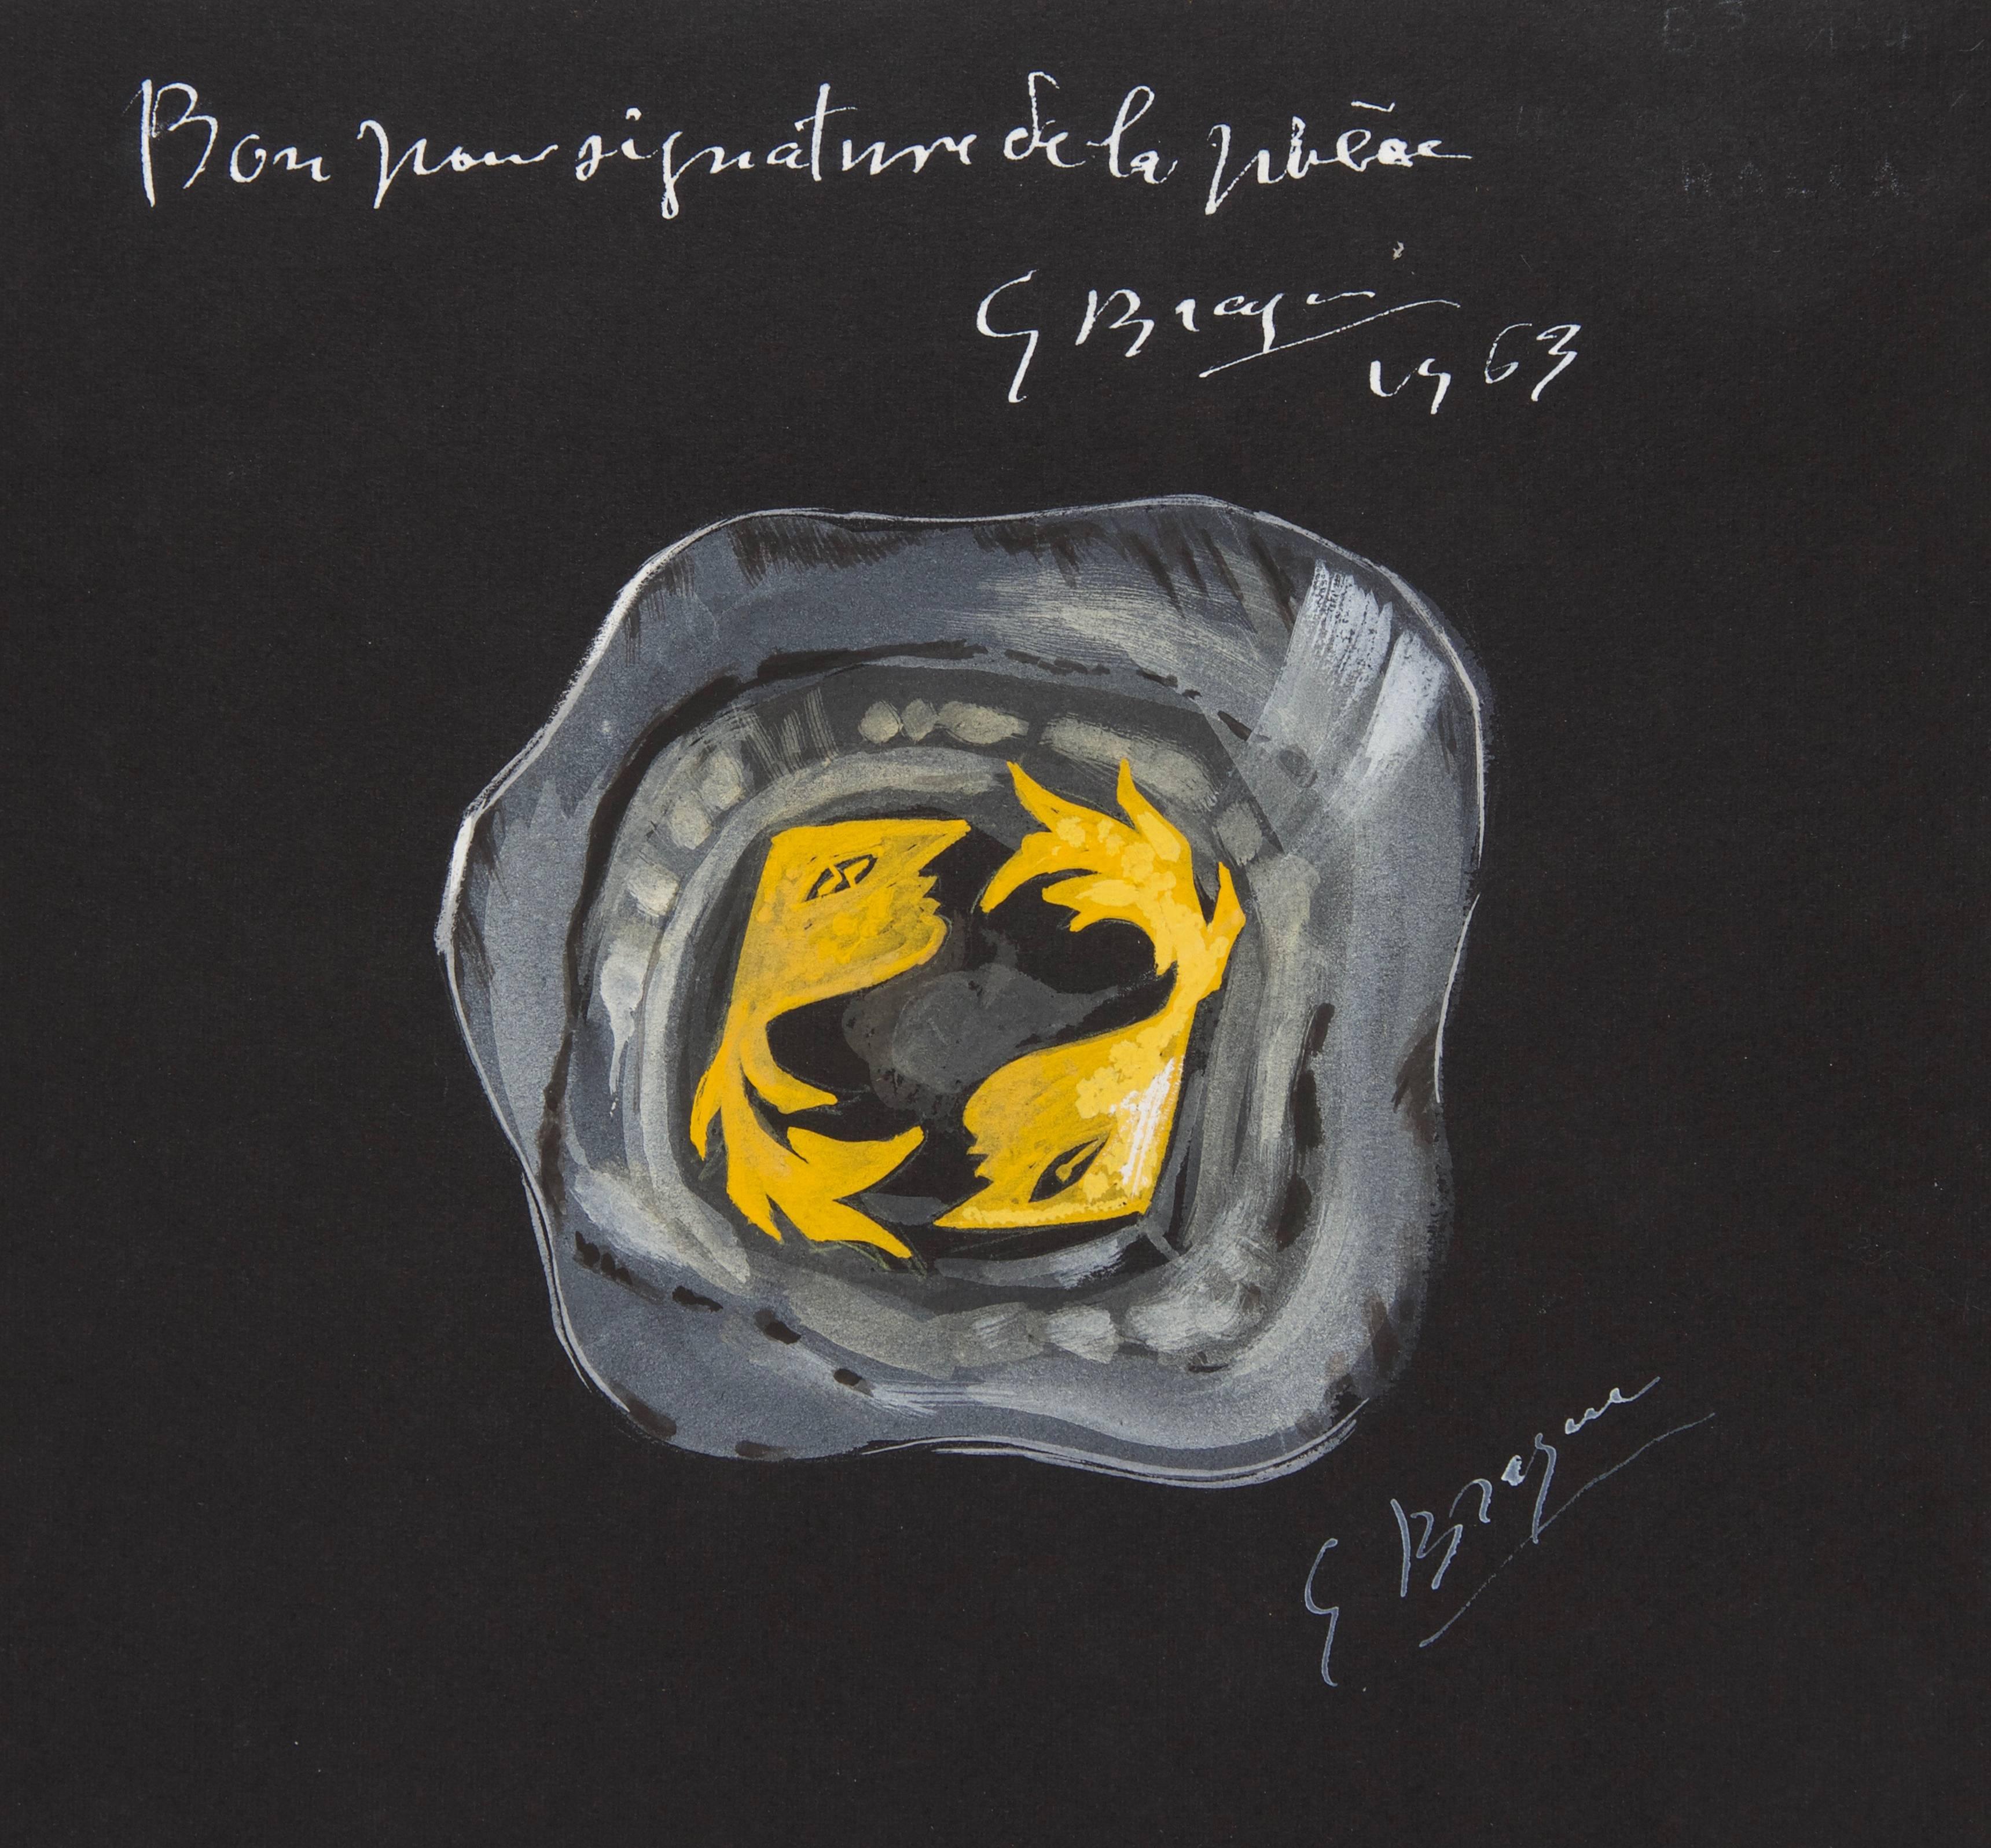 Georges Braque 
“Halia”, 1963.
Gouache on black drawing paper (measure: 22 x 28 cm) 
The Gouache comes with a 